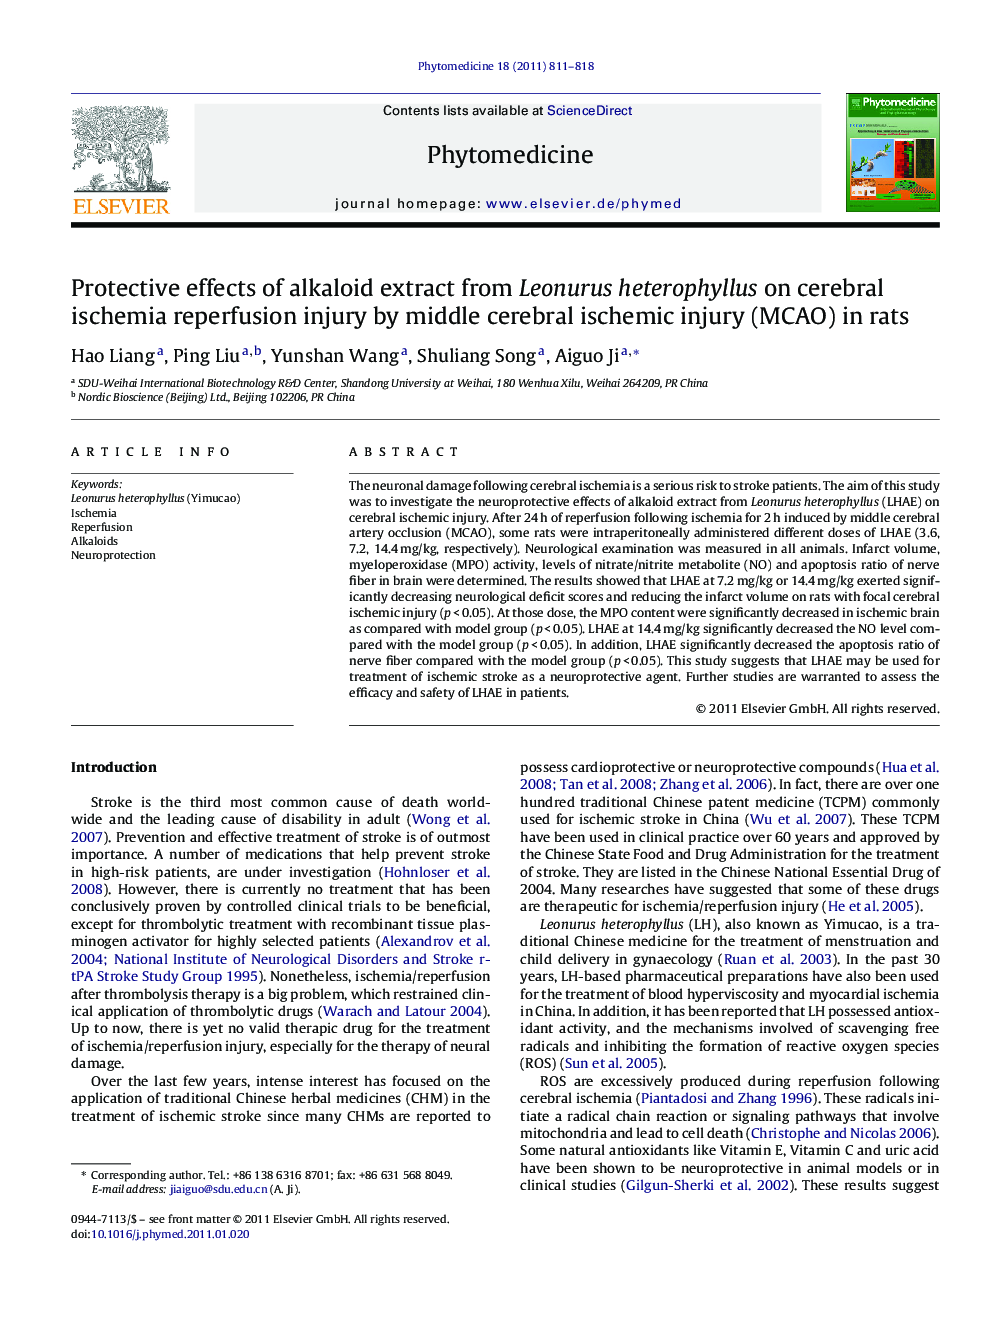 Protective effects of alkaloid extract from Leonurus heterophyllus on cerebral ischemia reperfusion injury by middle cerebral ischemic injury (MCAO) in rats